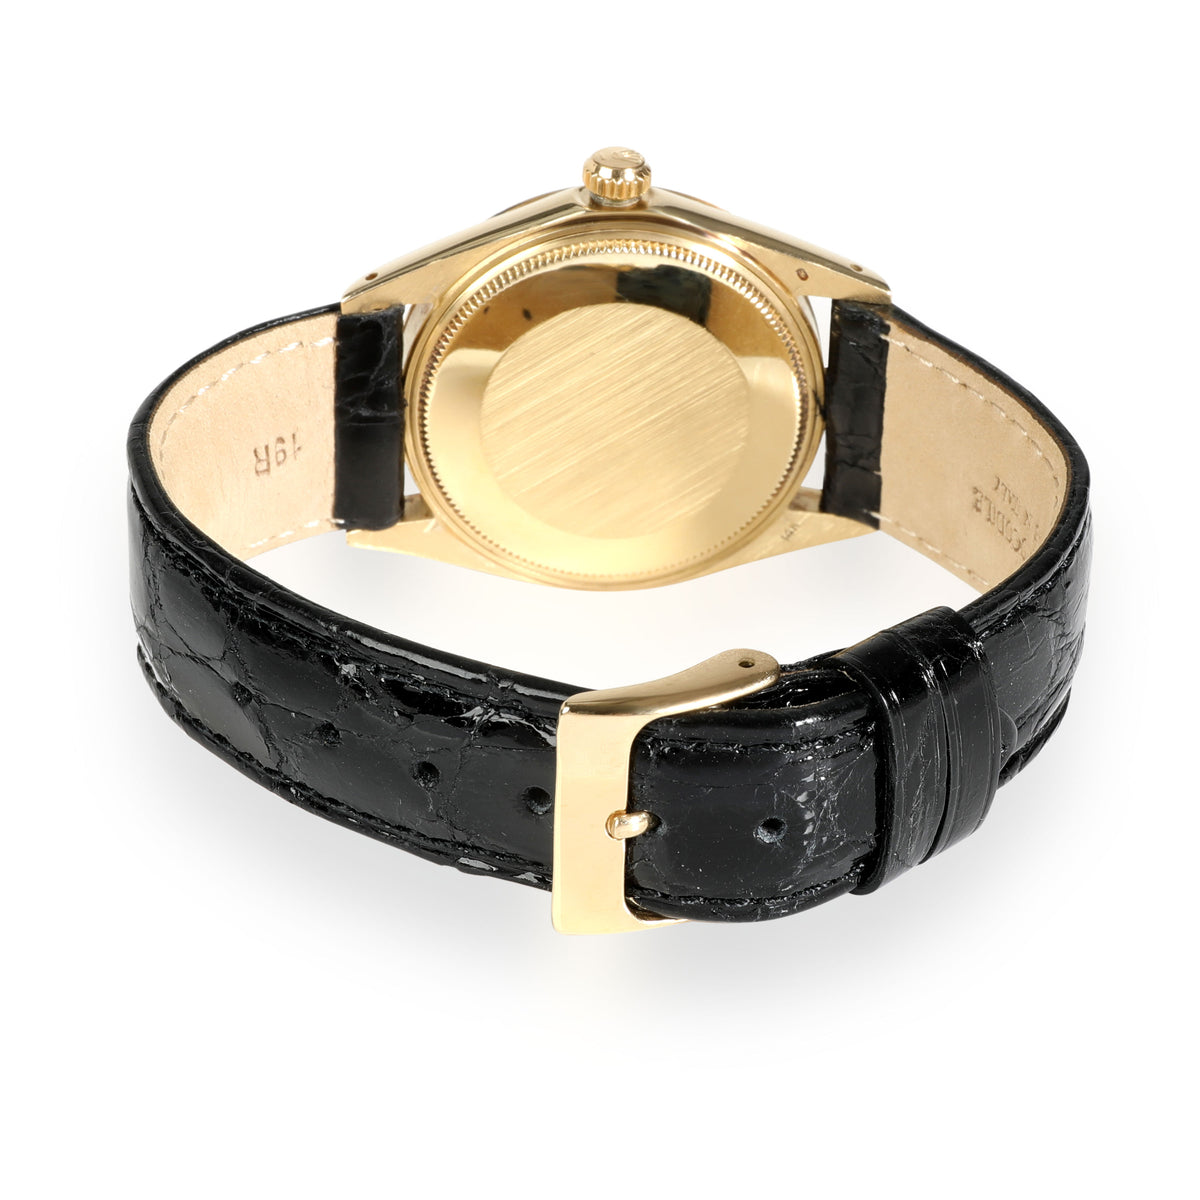 Rolex Date 1512 Men's Watch in 14kt Yellow Gold